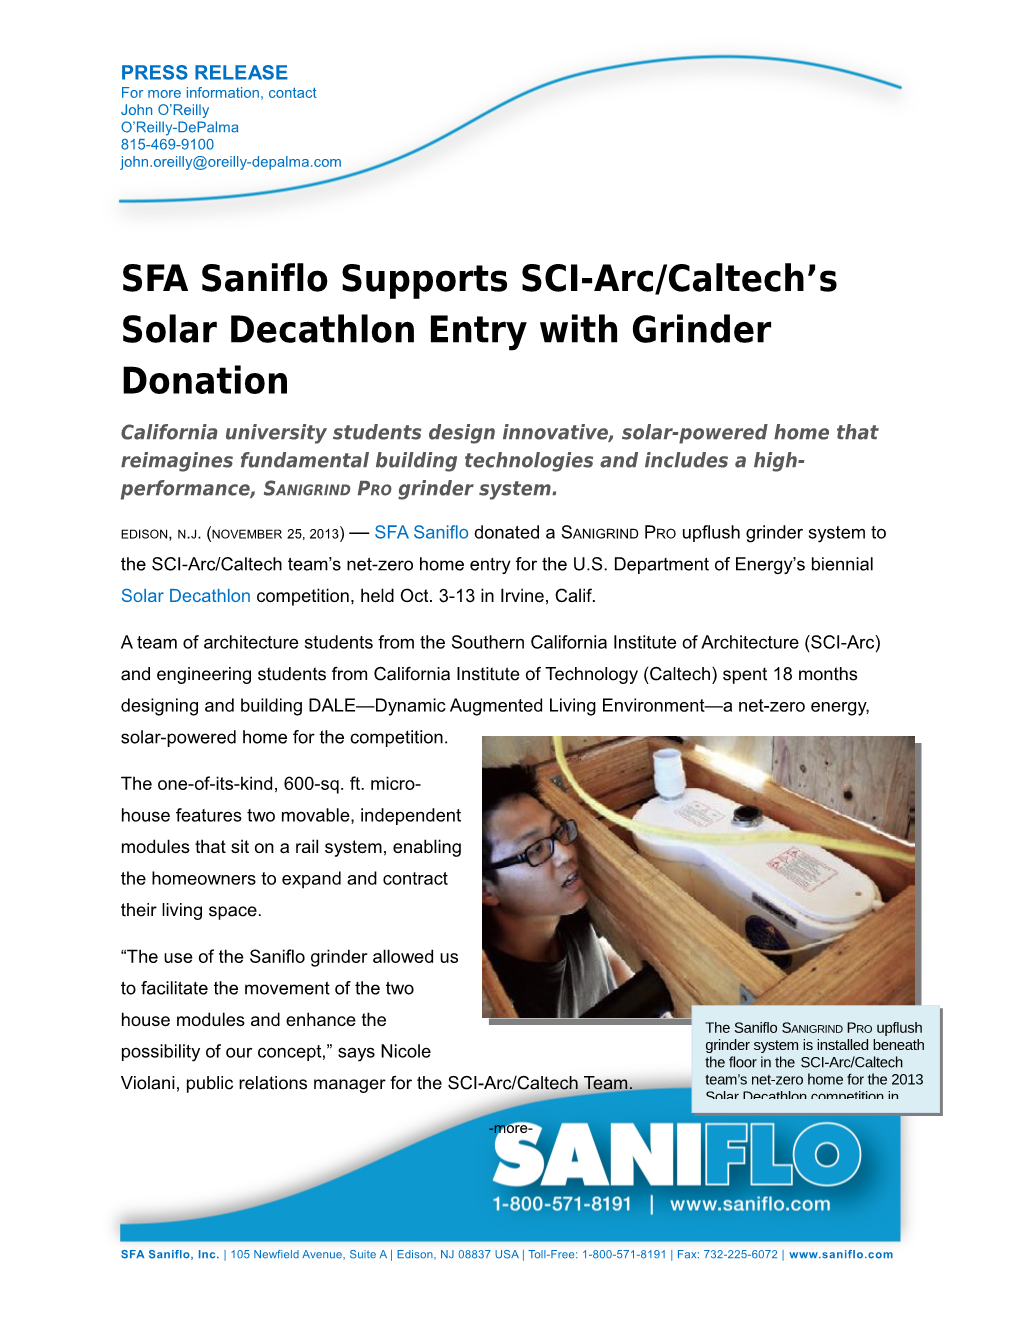 Saniflo SFA Supports SCI-Arc/Caltech S Solar Decathlon Entry Page 1 of 3